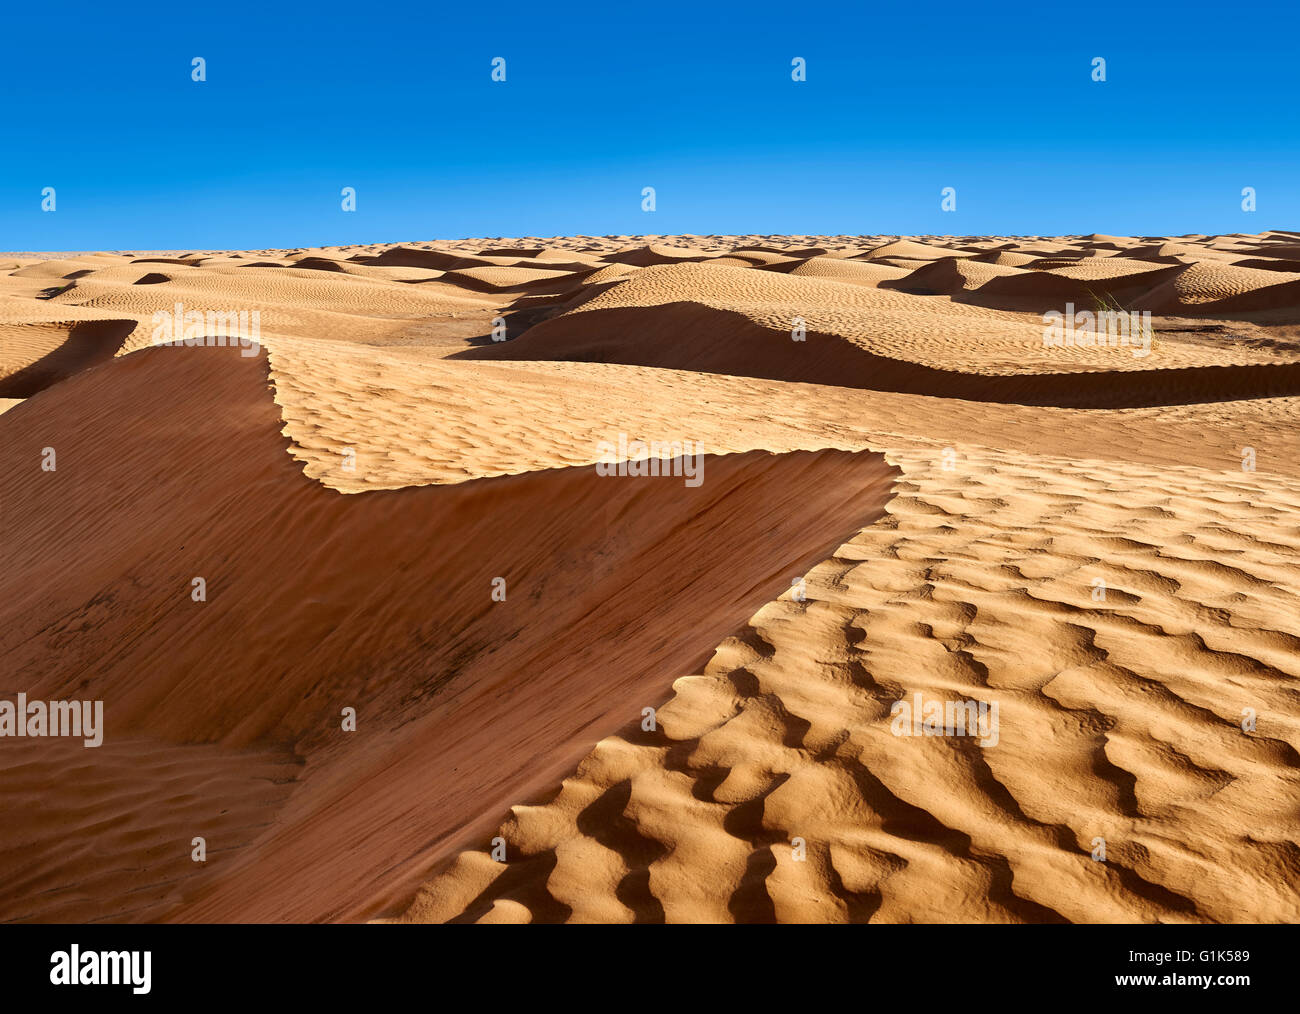 The Sahara desert sand dunes of Erg Oriental near the oasis of Ksar Ghilane, Tunisia, Africa Stock Photo